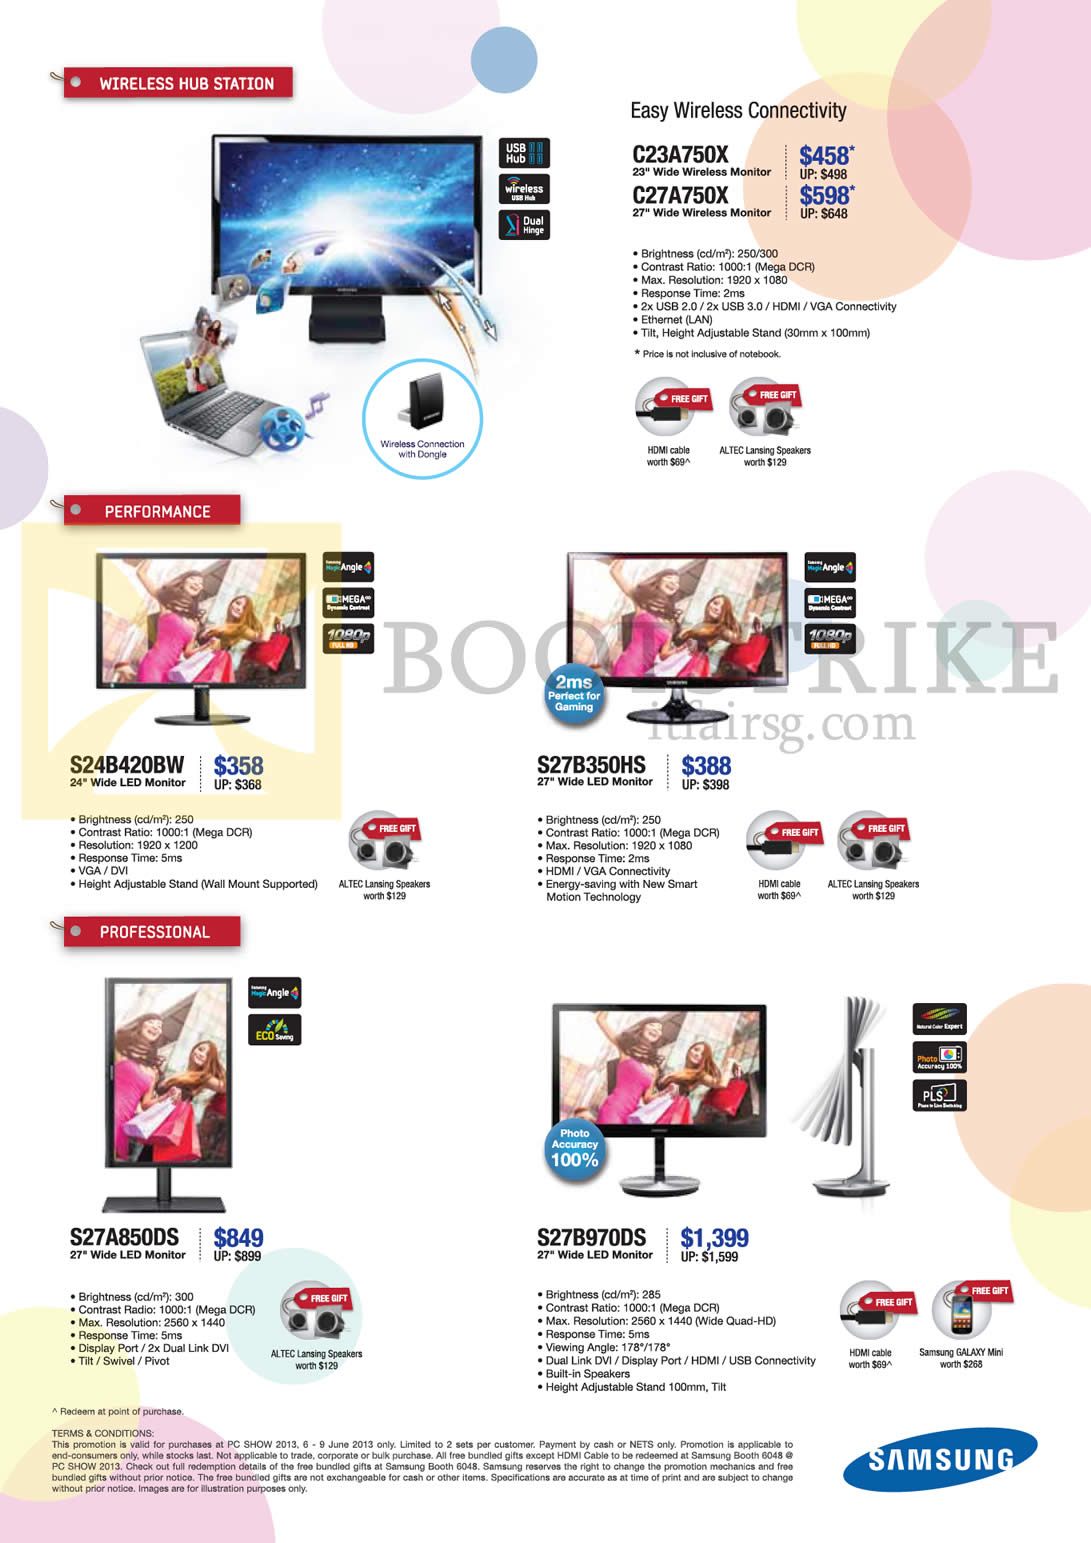 PC SHOW 2013 price list image brochure of Samsung Monitors C23A750X, C27A750X, LED S24B420BW, S27B350HS, S27A850DS, S27B970DS